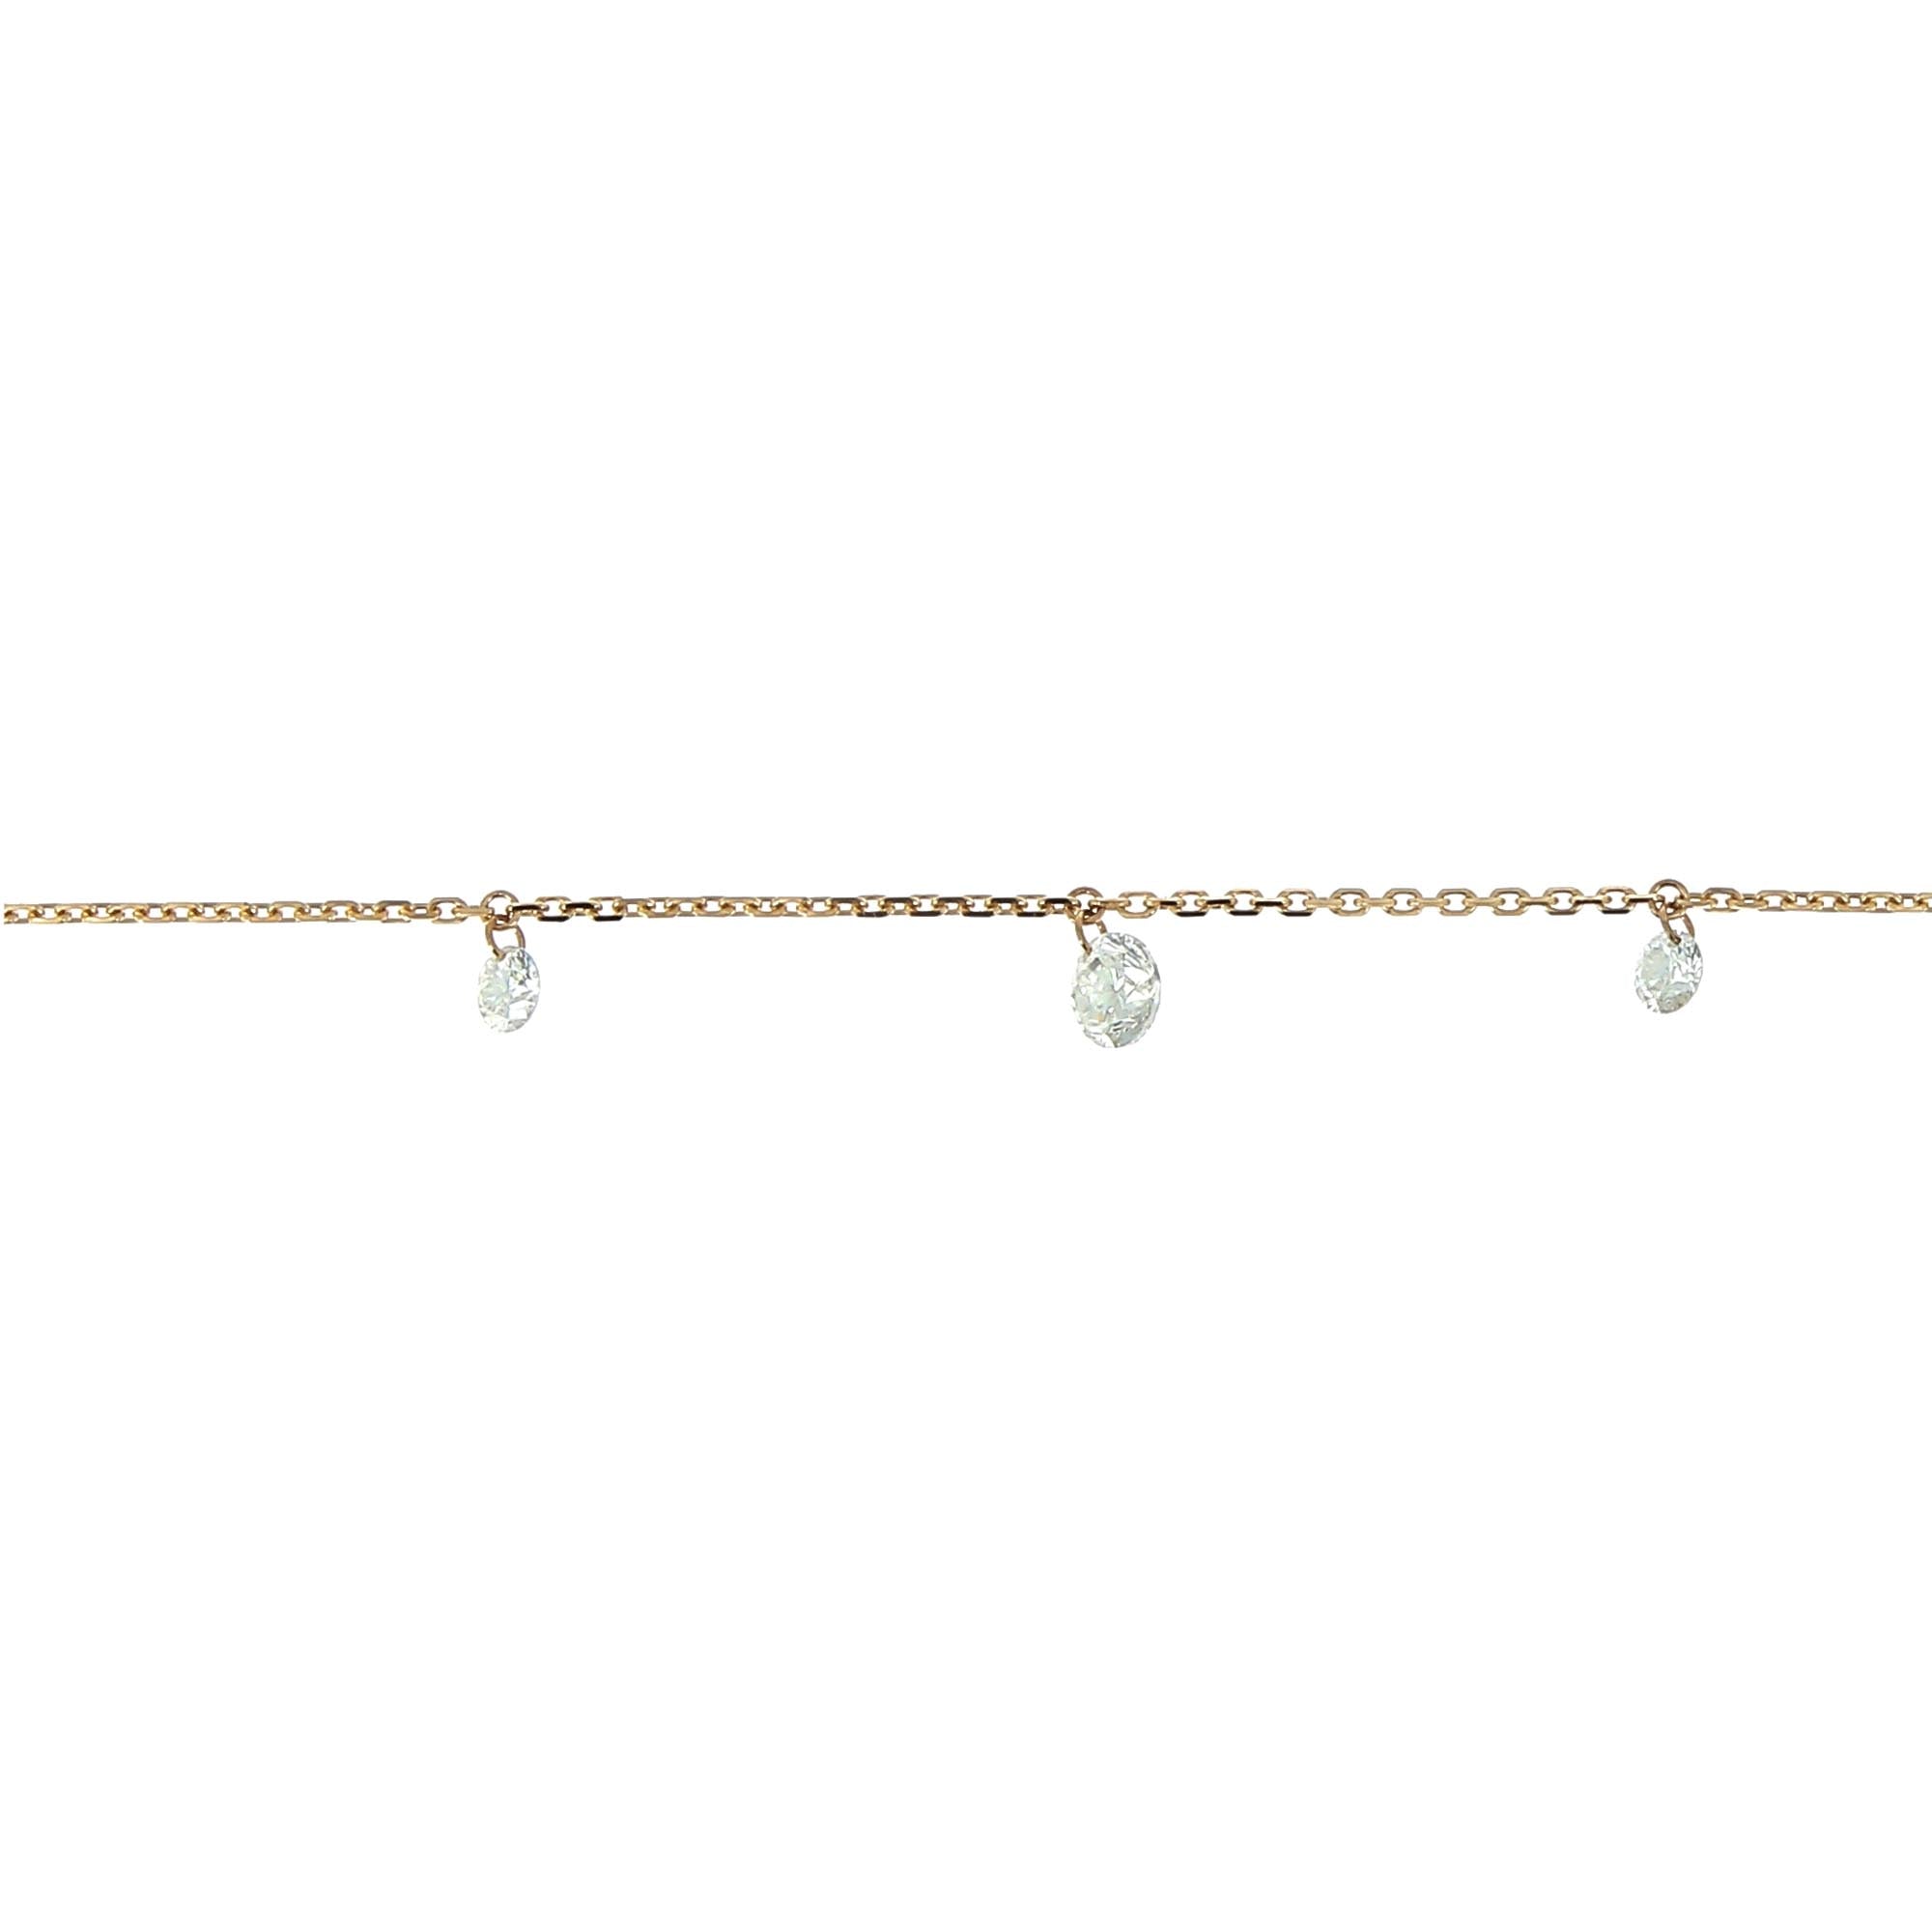 3mm Rose Gold Diamond Pendant Necklace 